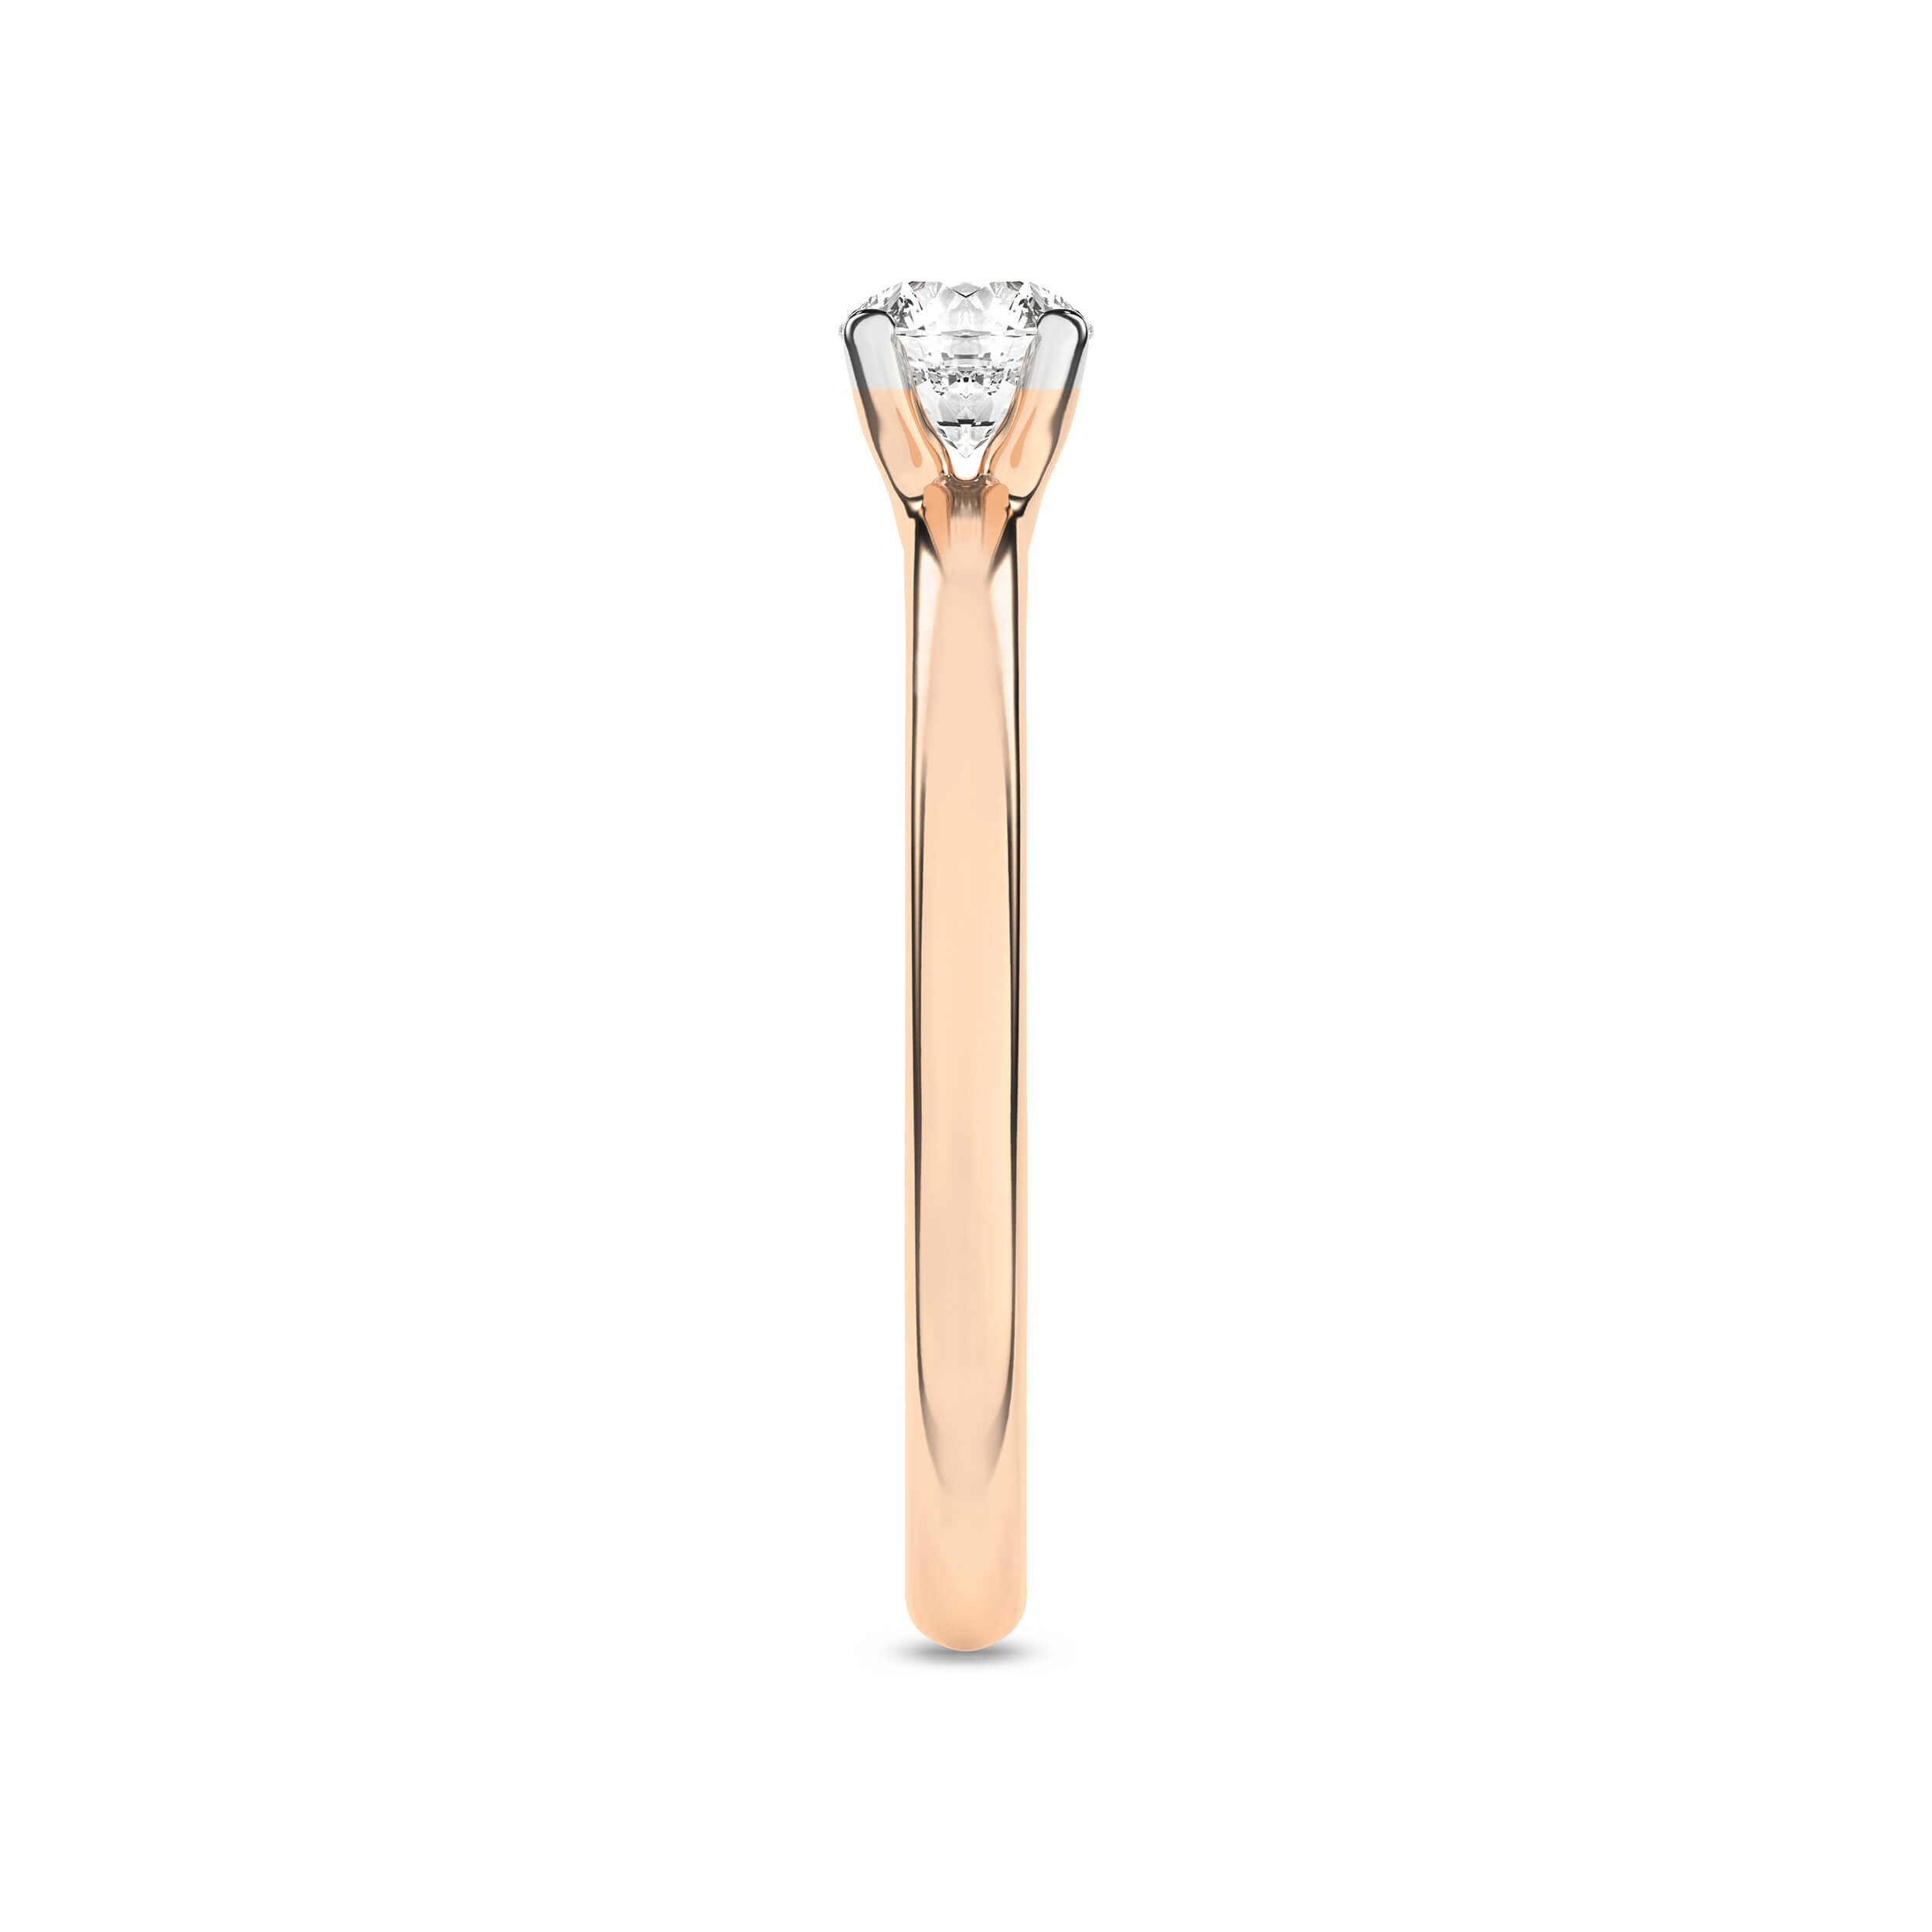 Inel de logodna din Aur Roz 14K cu Diamant 0.33Ct, articol RS0910, previzualizare foto 4